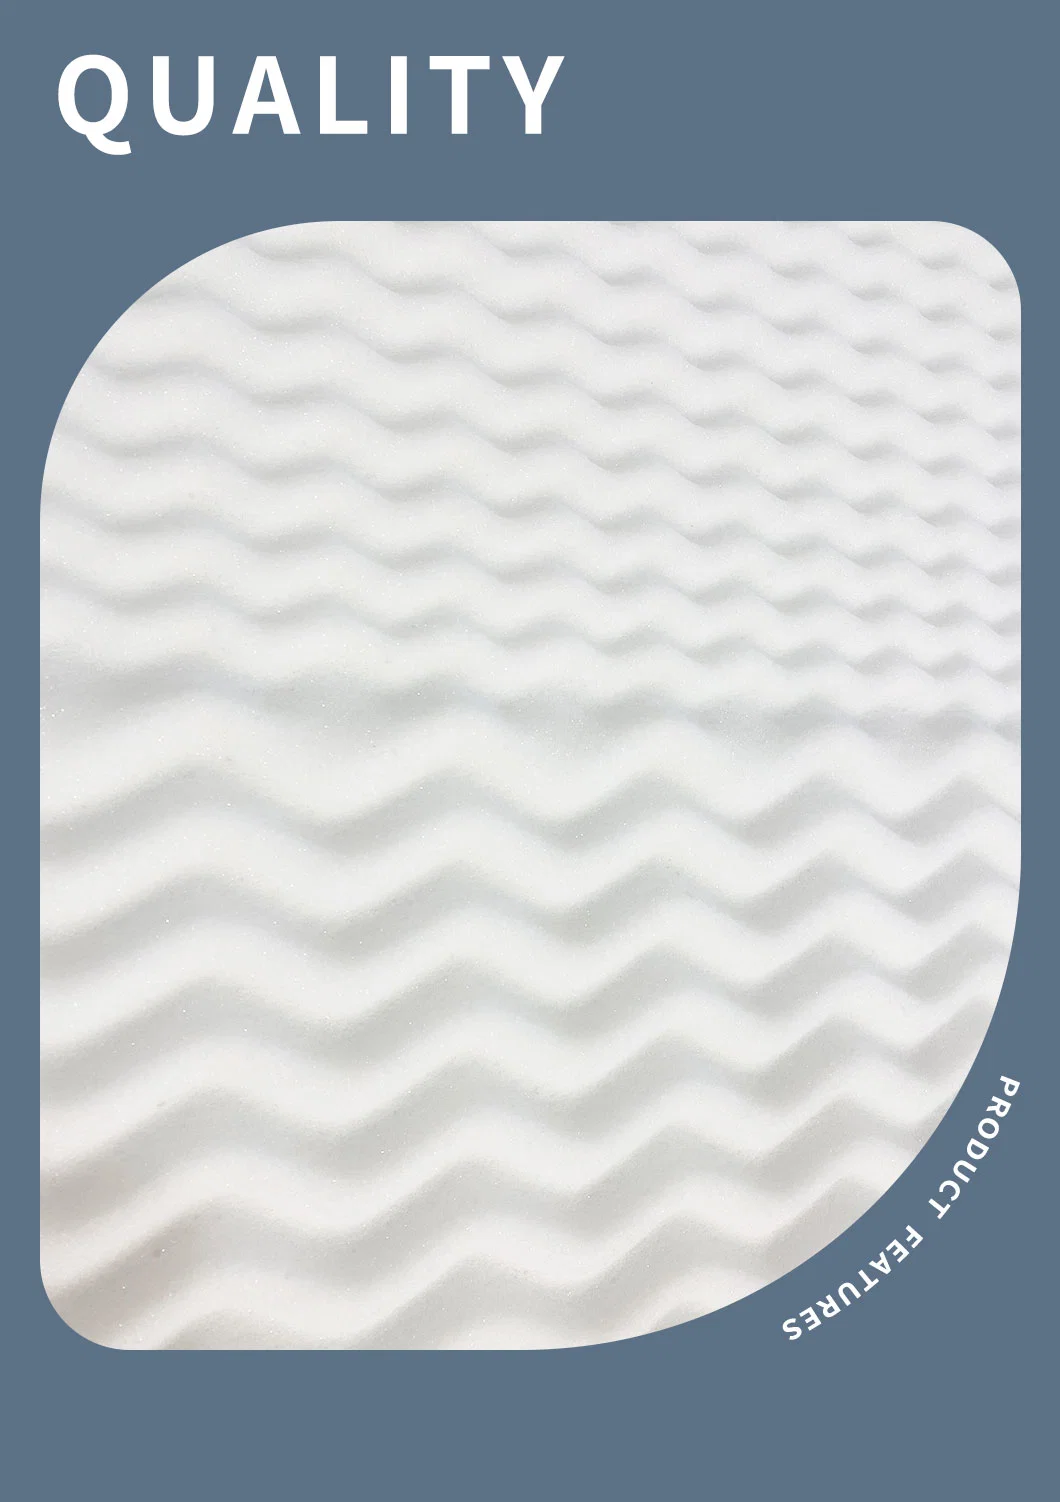 Multiple Pattern 40d Memory Foam Mattress for Better Sleeping